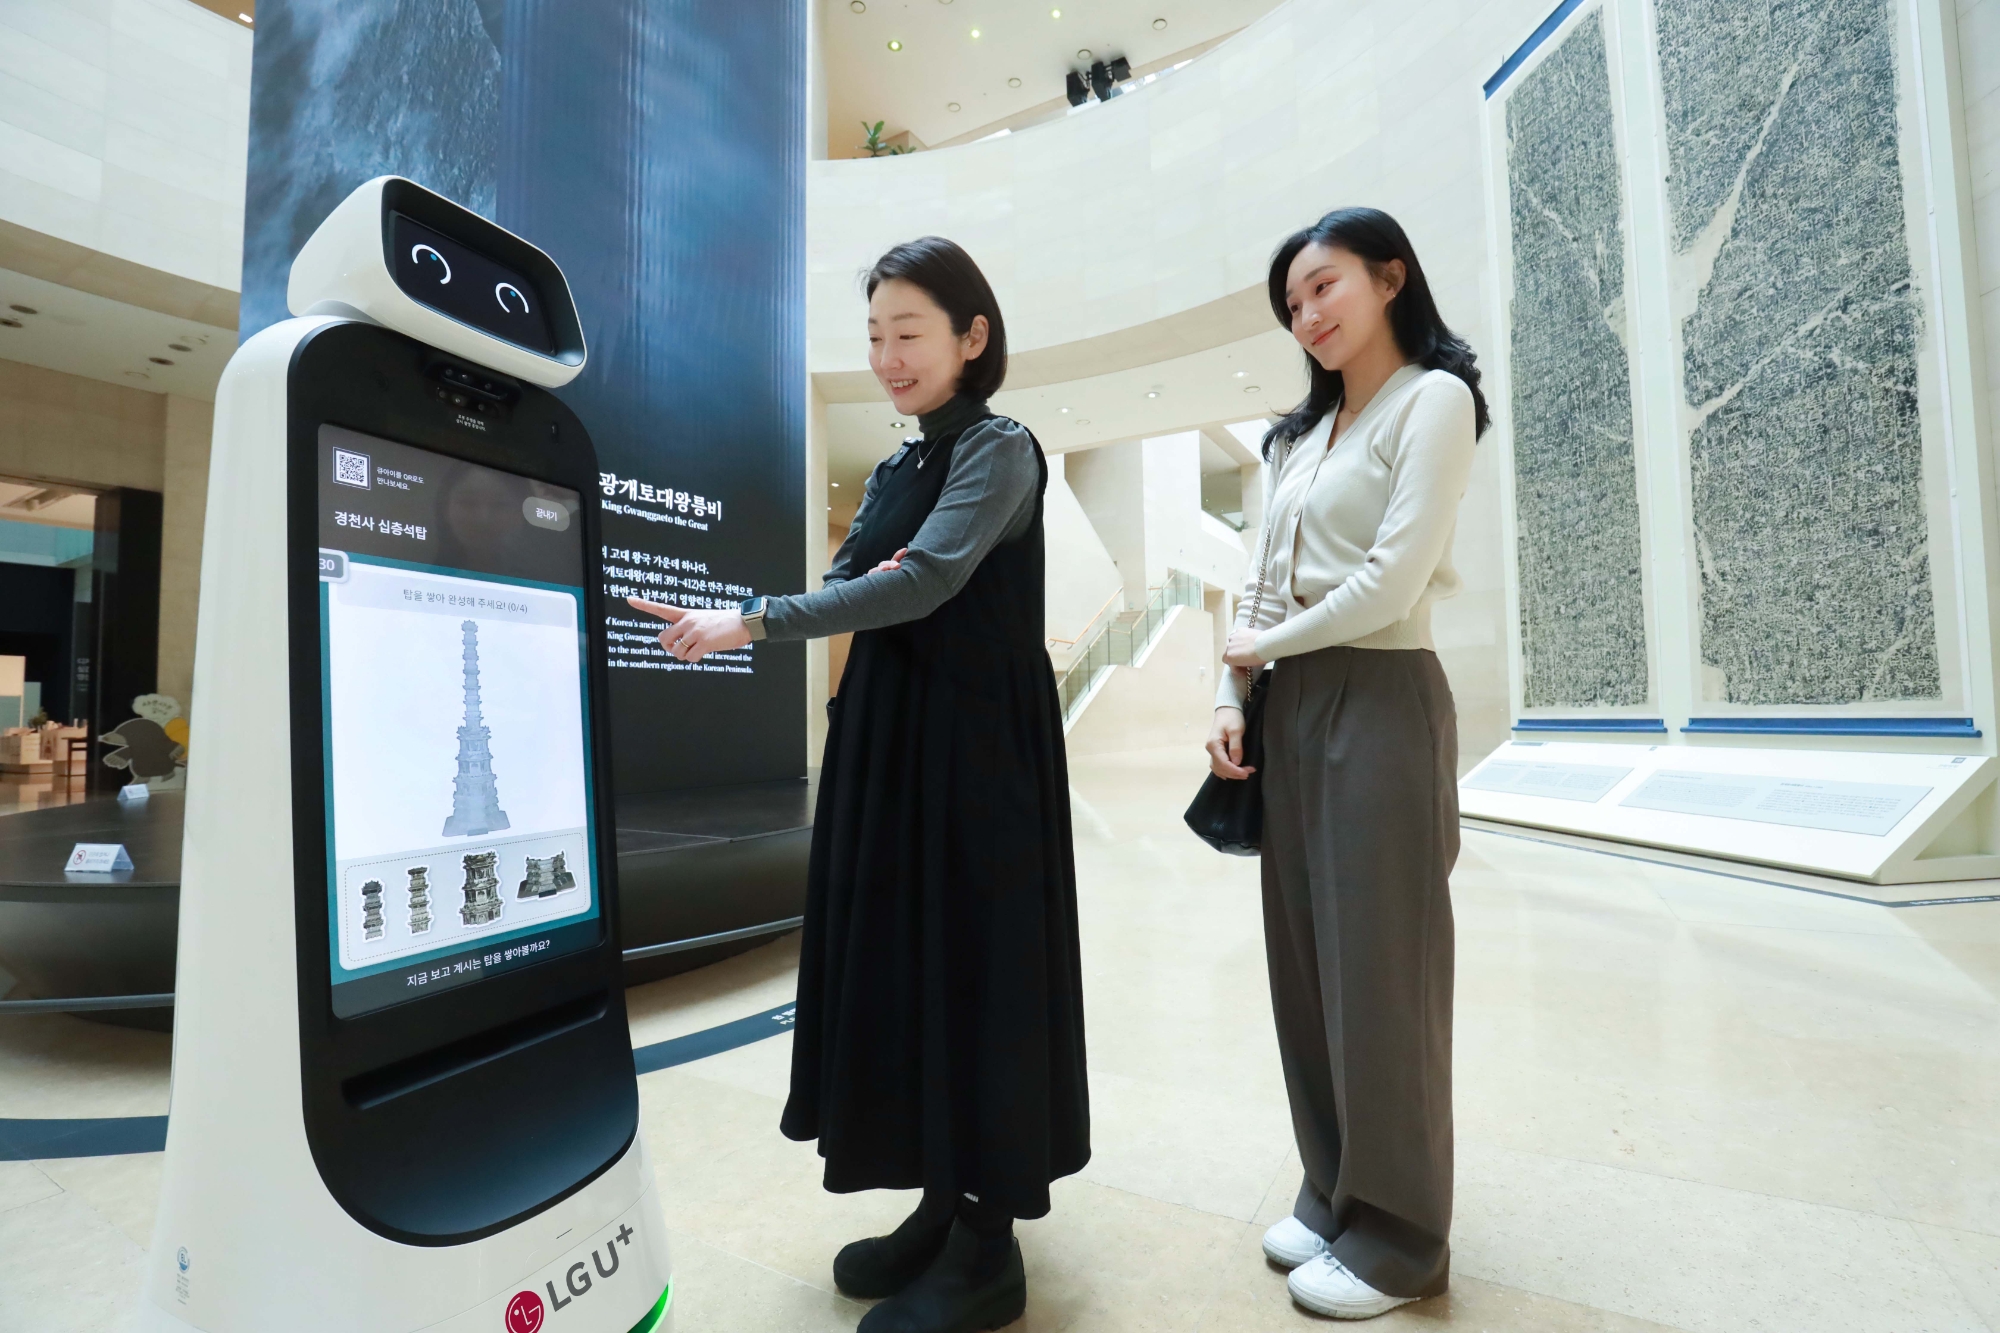 LG유플러스가‘U+안내로봇’과 ‘U+실내배송로봇’을 새롭게 출시해 로봇 사업 영역을 확장한다. 사진은 이촌동 소재 국립중앙박물관에서 U+안내로봇의 설명을 듣고 있는 LG유플러스 모델의 모습. / 사진제공=LG유플러스 